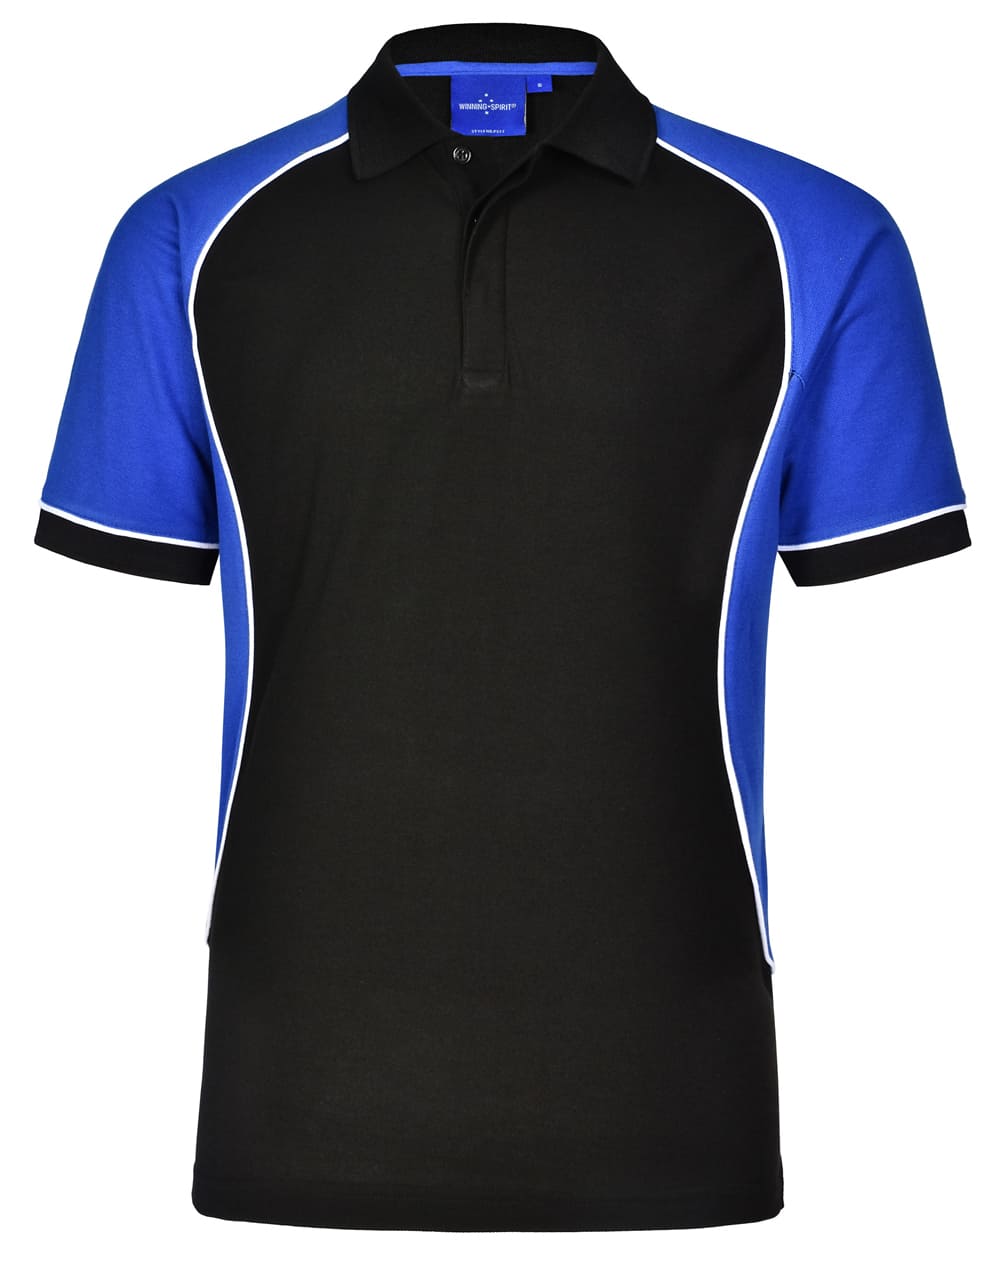 Custom Printed Mens Arena (Black, White, Megenta) Tri-Color Polo T-Shirts Online Australia